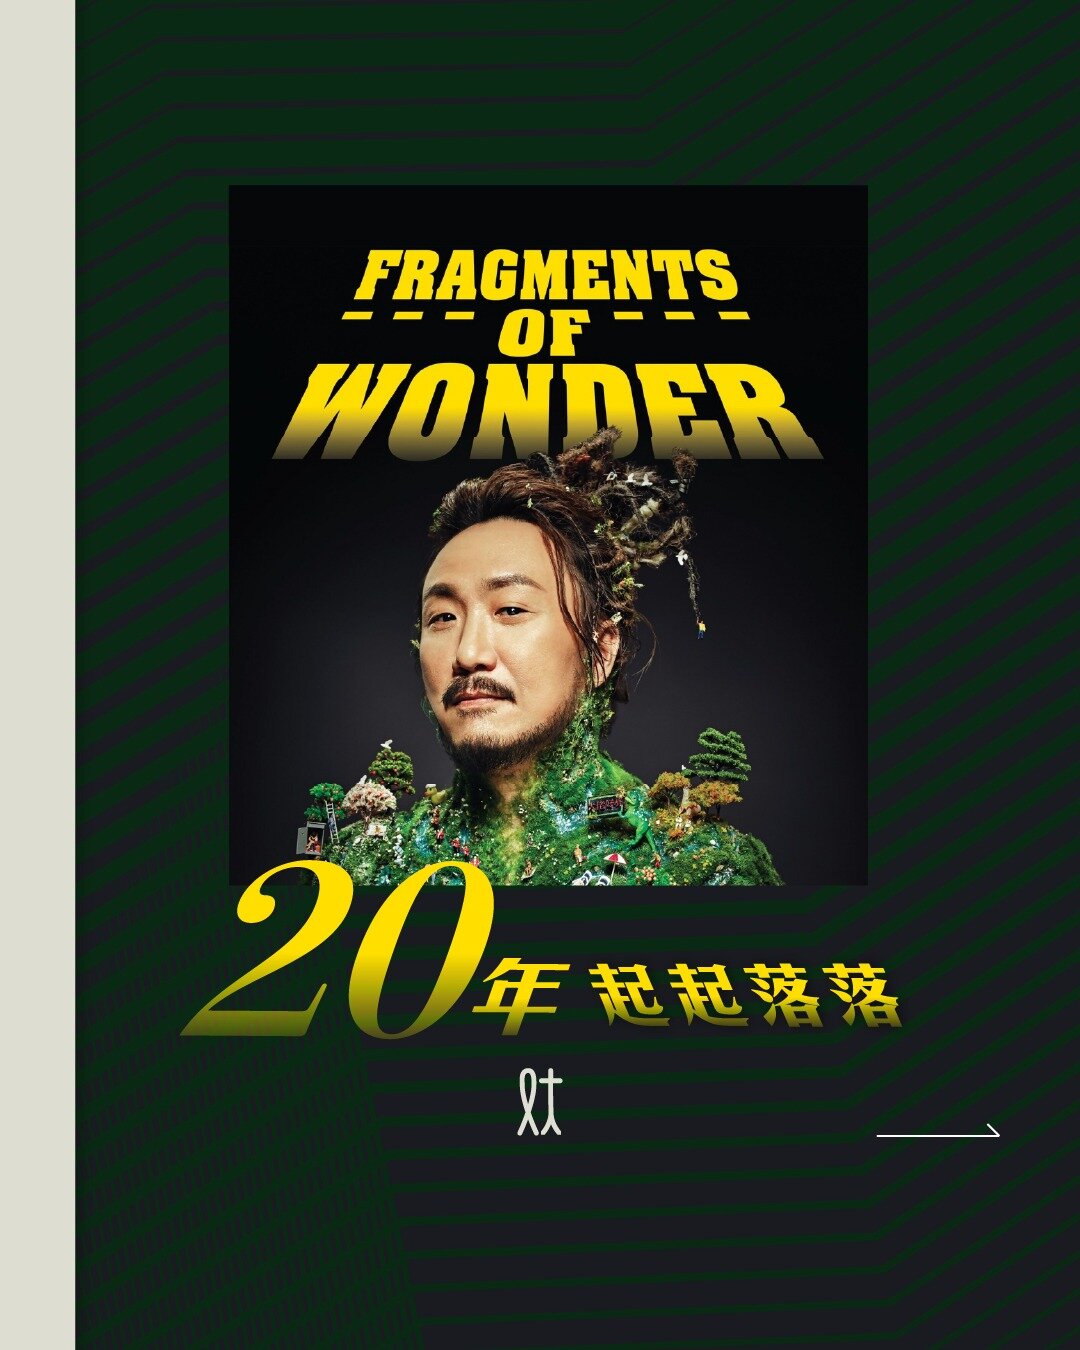 Fragments of Wonder 
二十年起起落落，再度回首，為最愛重拾音樂

一連六場Fragments of Wonder 鄭中基世界巡迴演唱會香港站，在2月19日周一晚上完滿落幕。演唱會檔期橫跨農曆年初四、情人節、初七人日，讓每個晚上都有不同的氣氛。鄭中基（Ronald）曾表示很享受擔任演唱會嘉賓，而他自己的演唱會，也是特別請了不同界別的嘉賓上臺，打開名單一看，有 LMF、鄧麗欣 Stephy、Anson Kong、古天樂等等，而最特別的兩位，想必是他「Darling」谷德昭和囡囡 